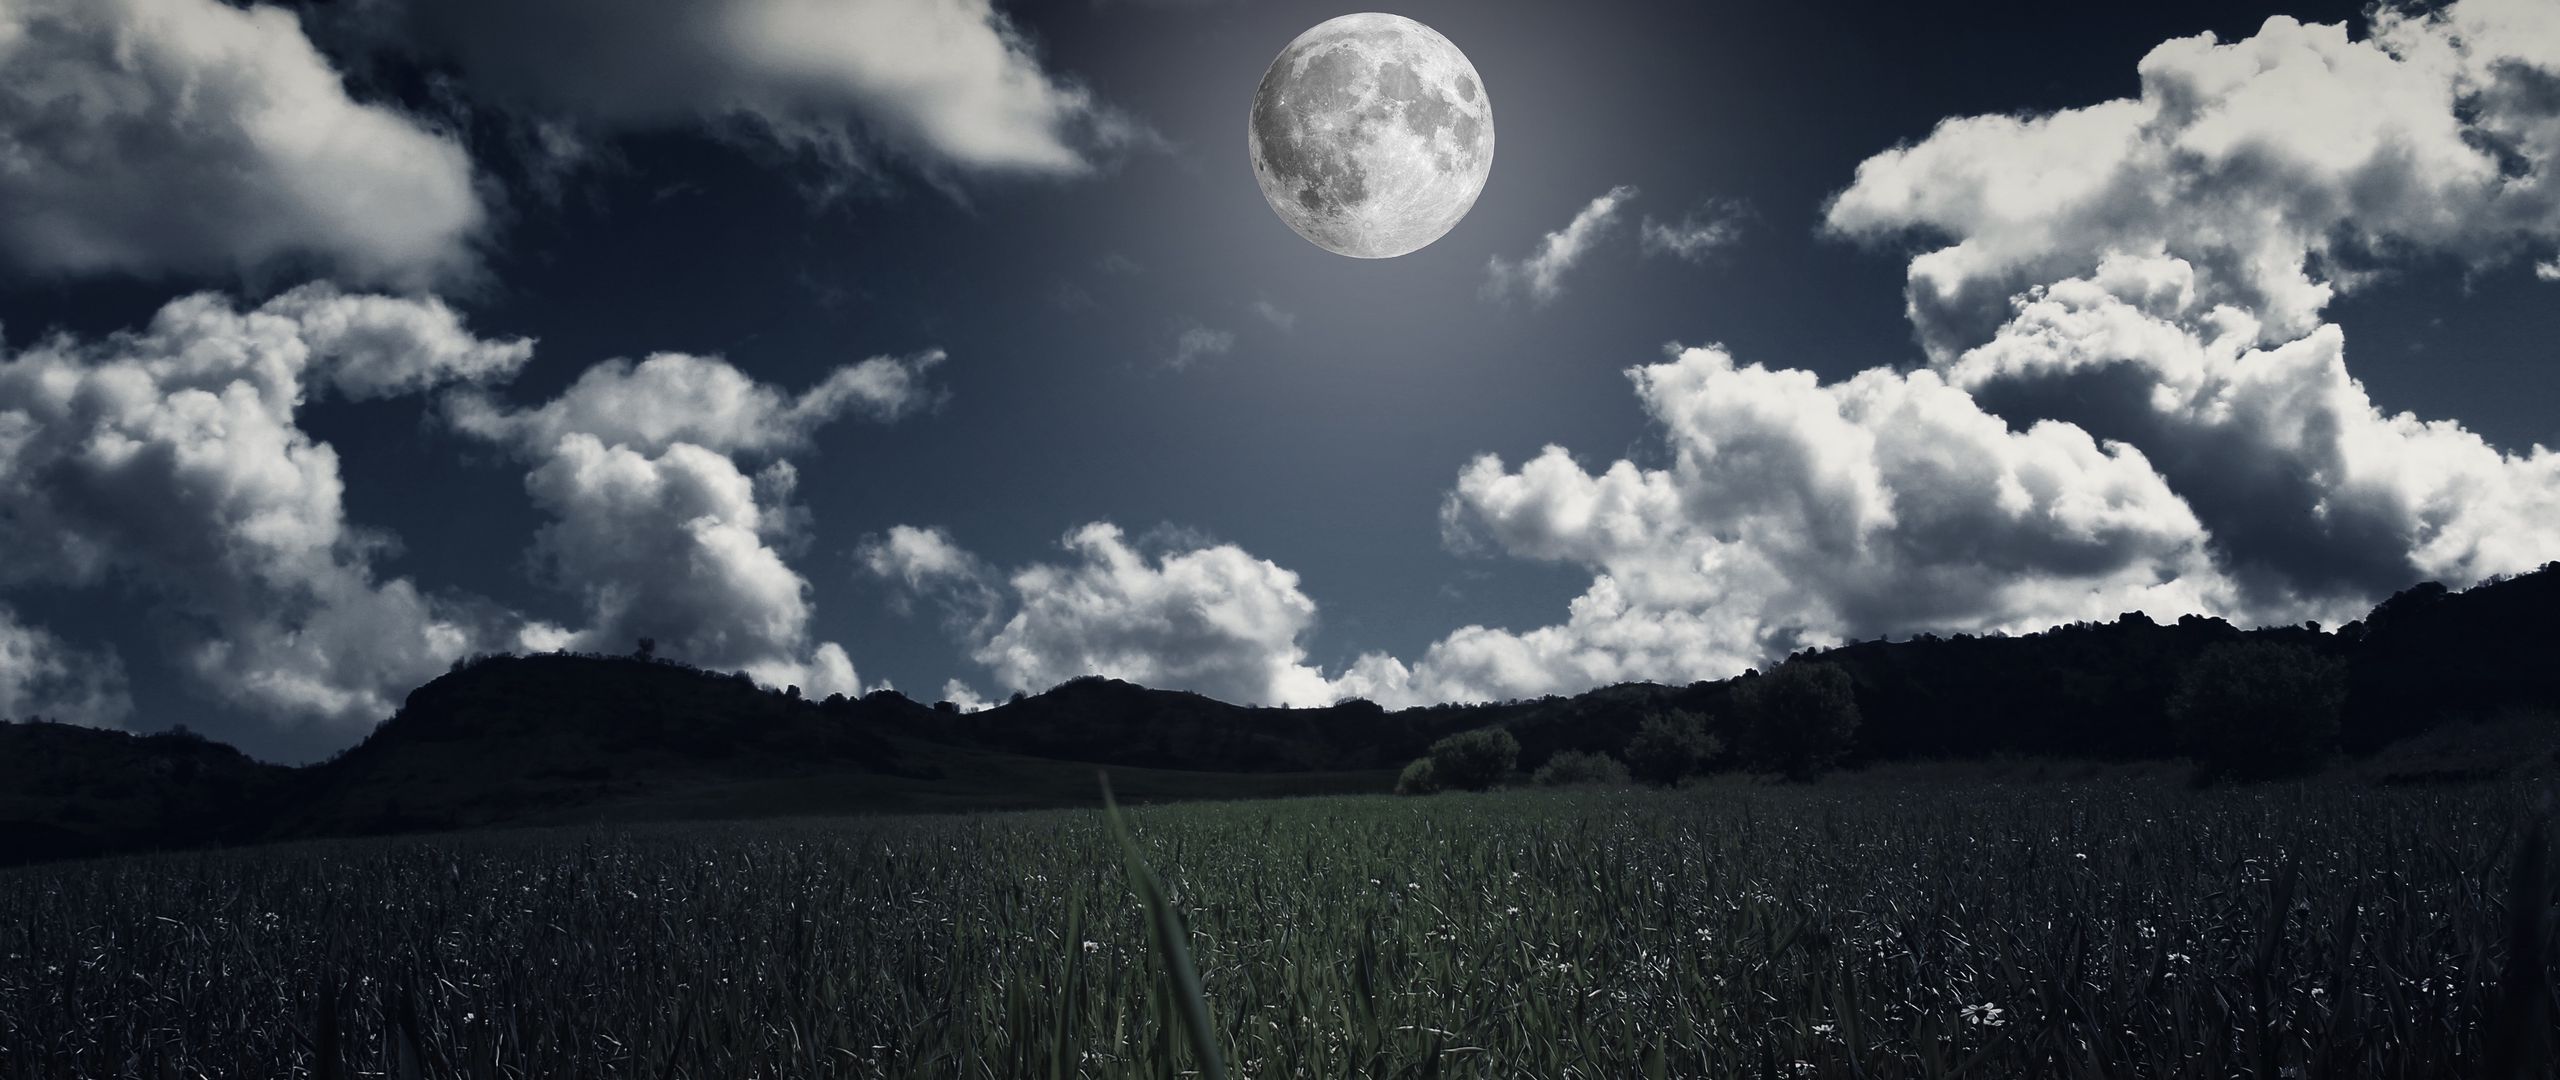 Download wallpaper 2560x1080 moon, clouds, grass, field, full moon